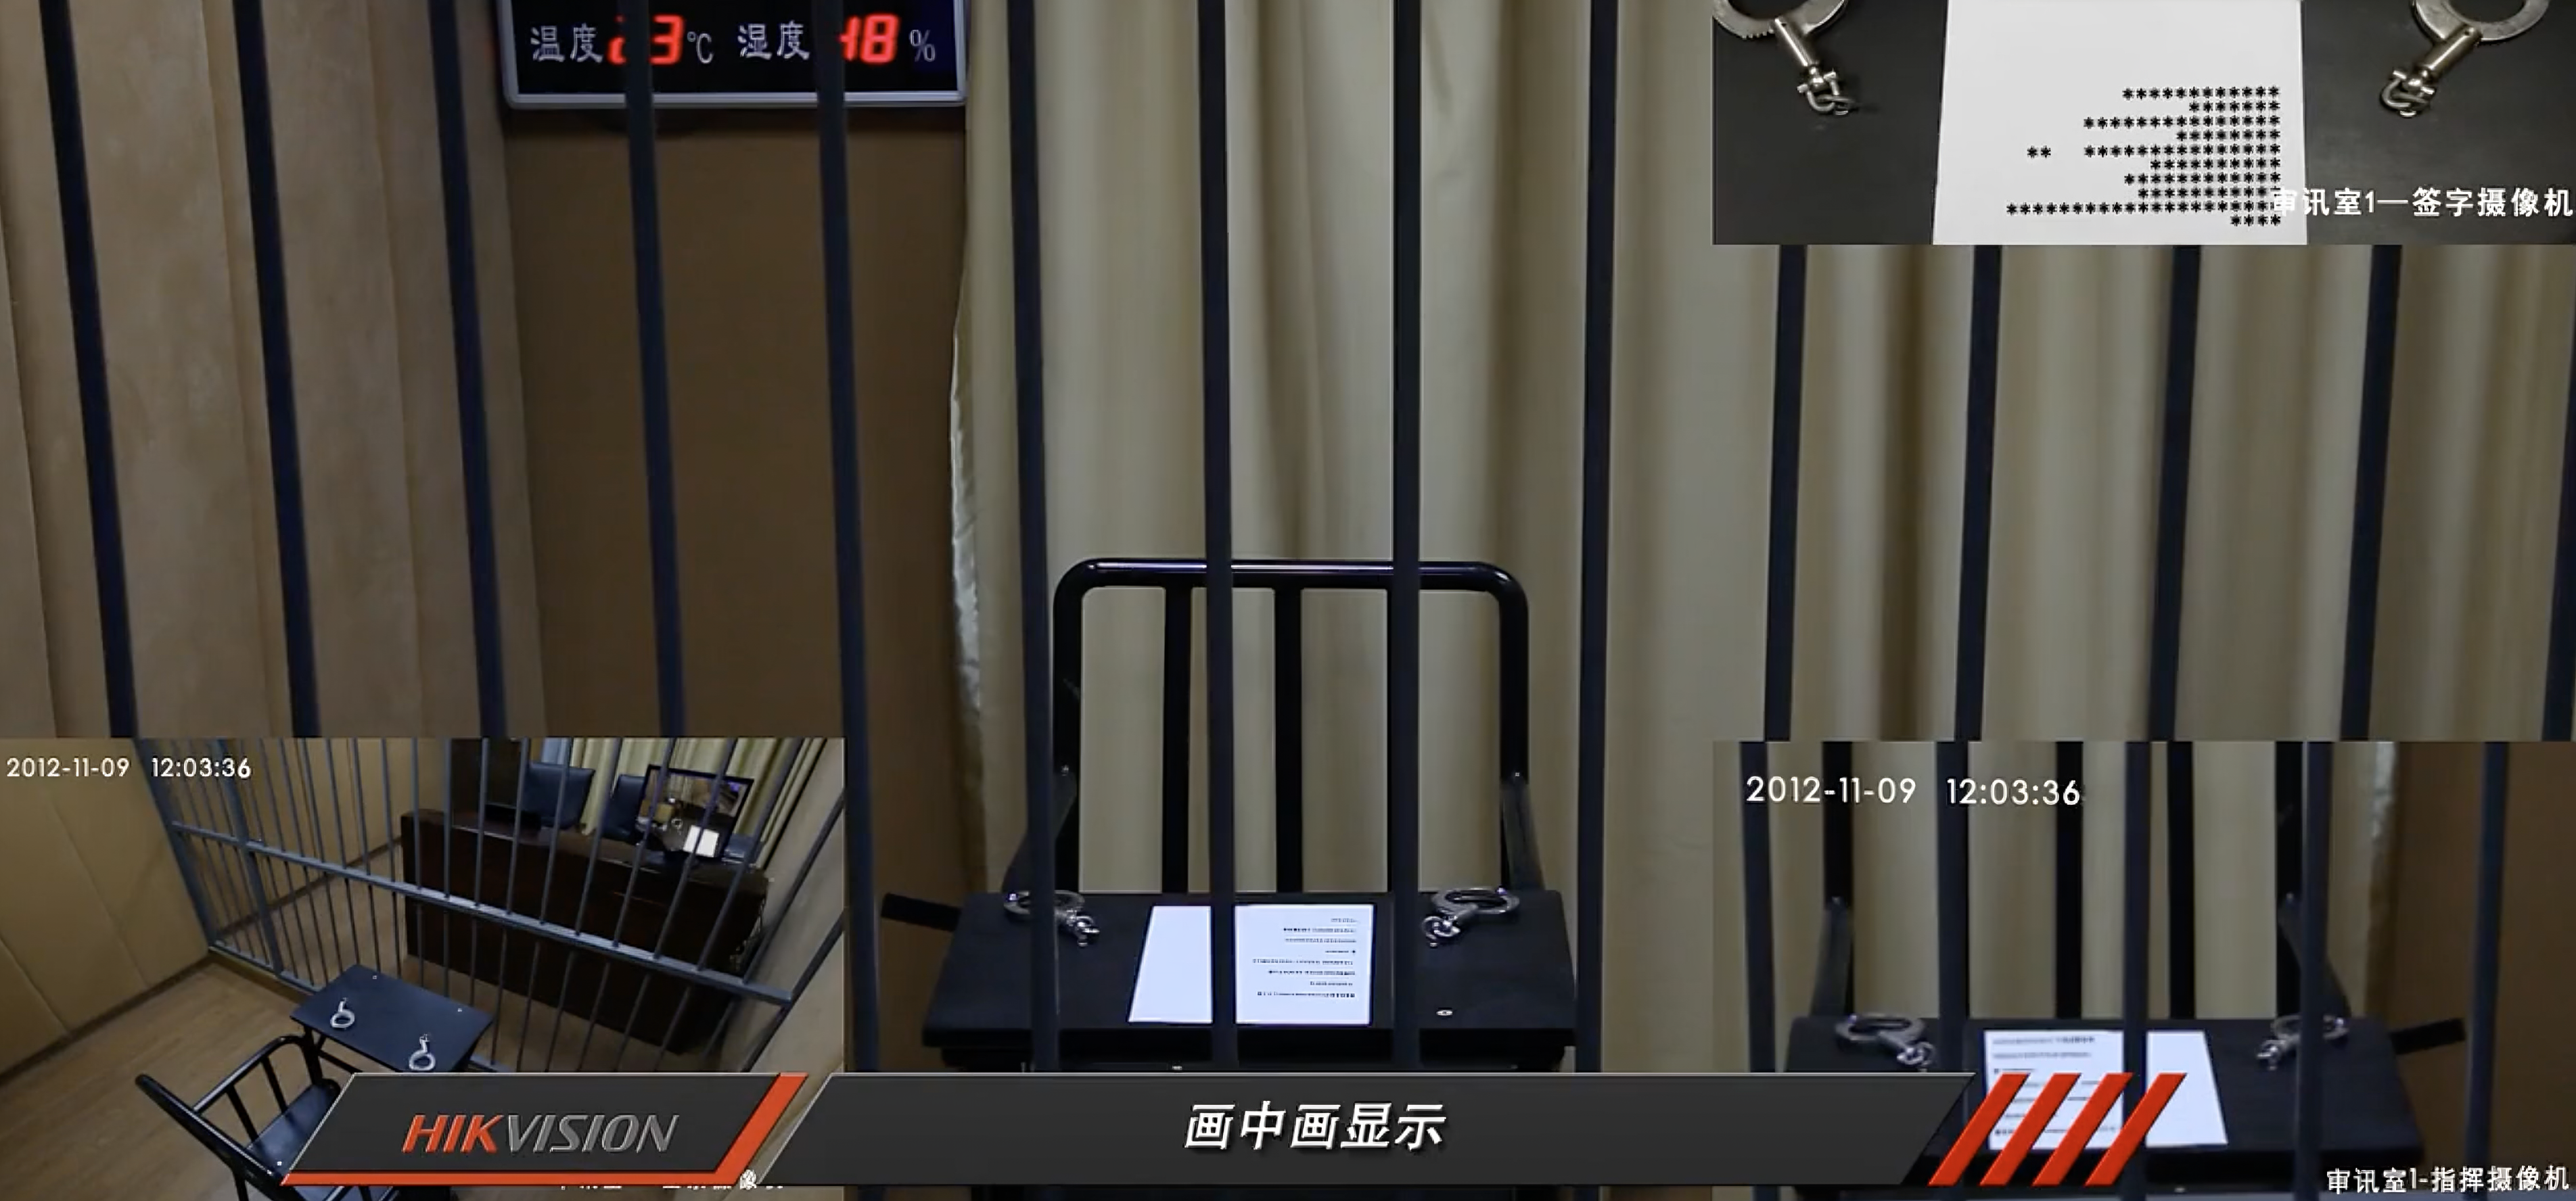 Communist China deck 2 | behind china’s use of interrogation chamber tech | technology